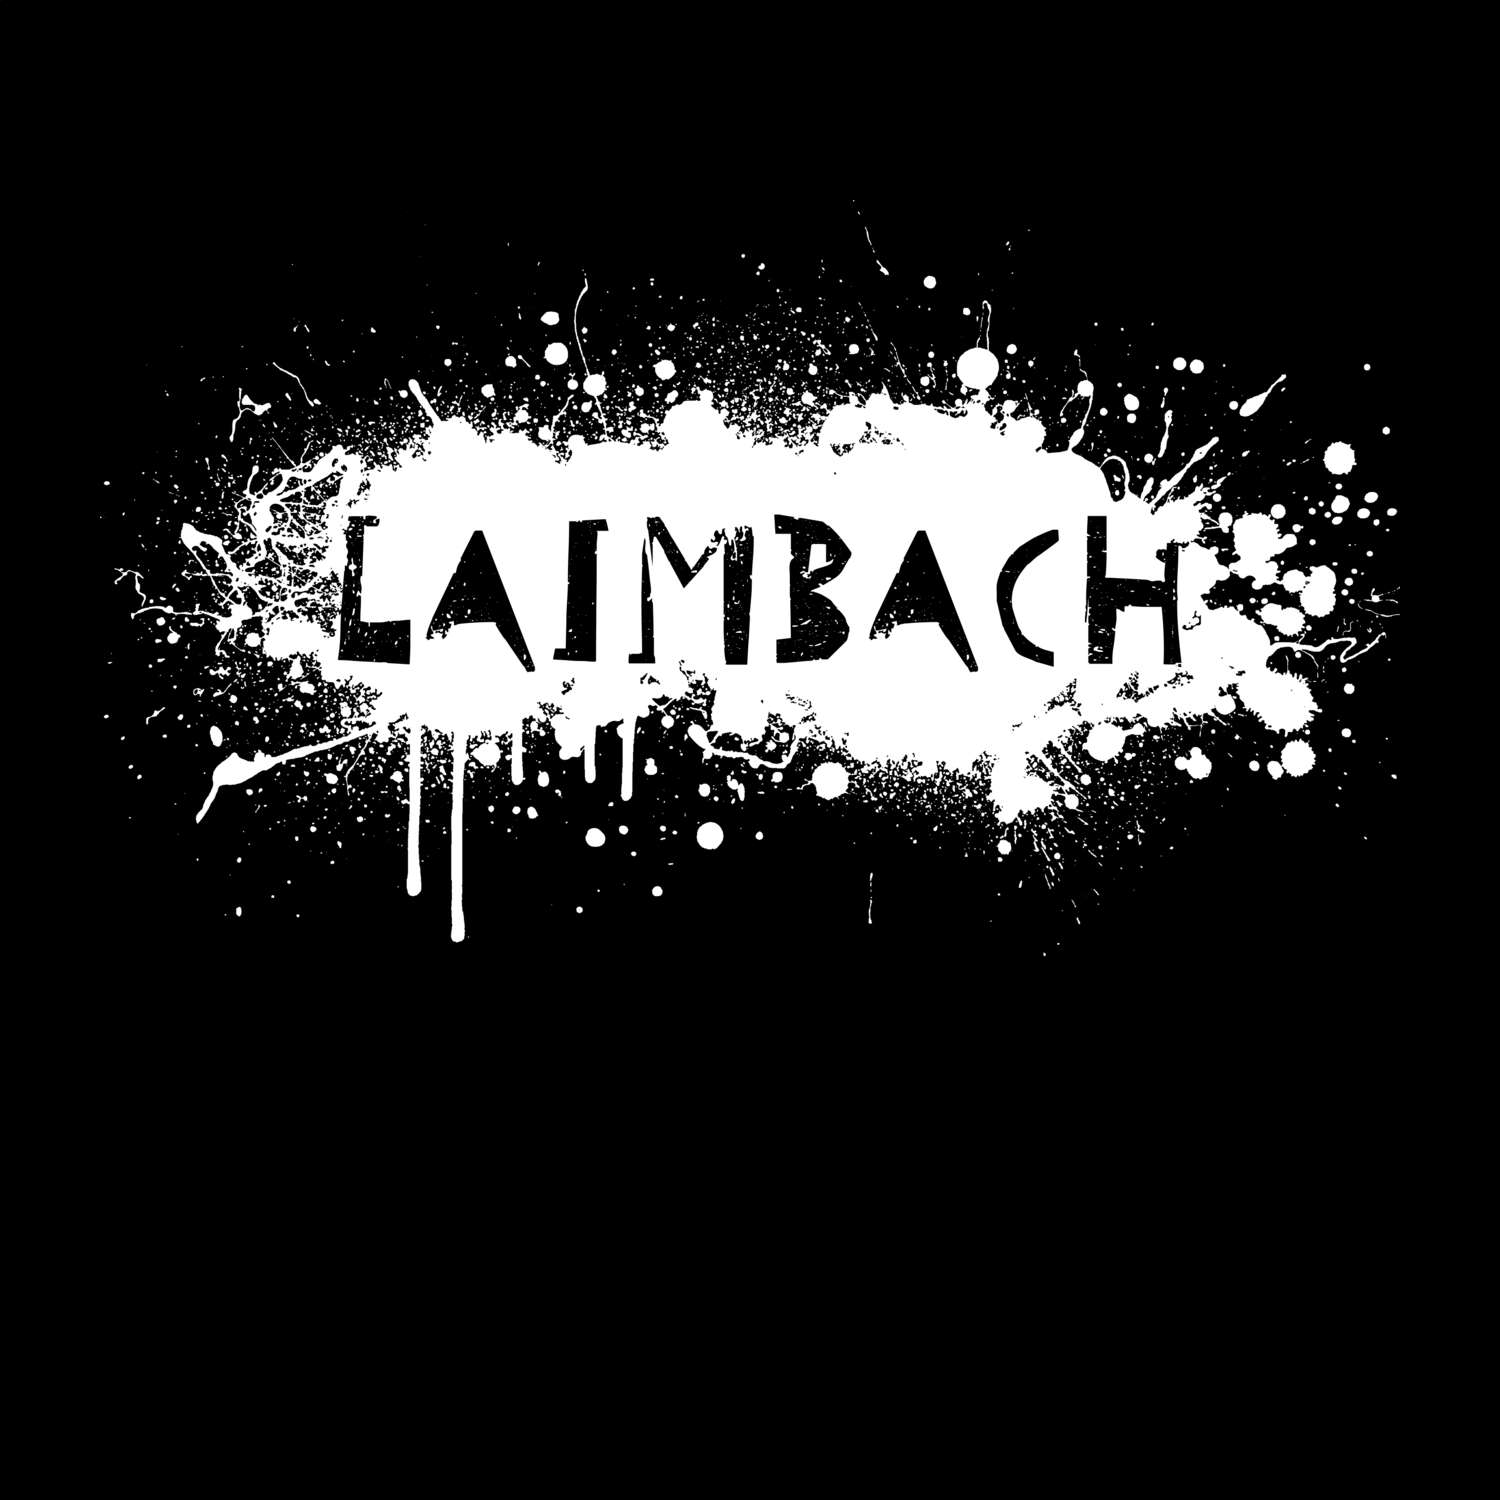 Laimbach T-Shirt »Paint Splash Punk«